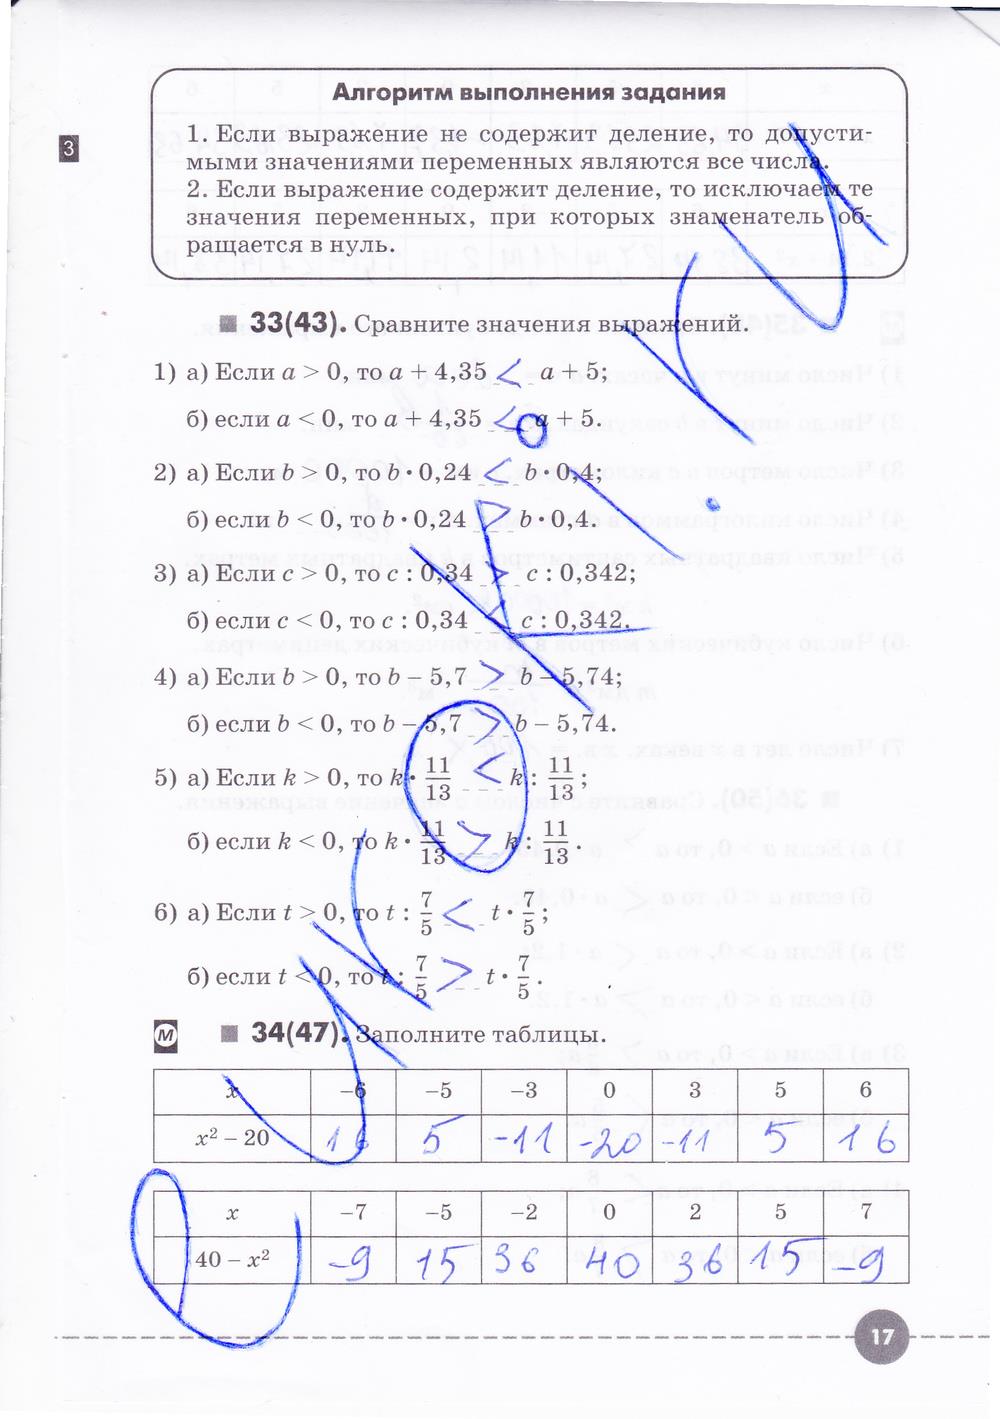 гдз 7 класс рабочая тетрадь часть 1 страница 17 алгебра Муравин, Муравина